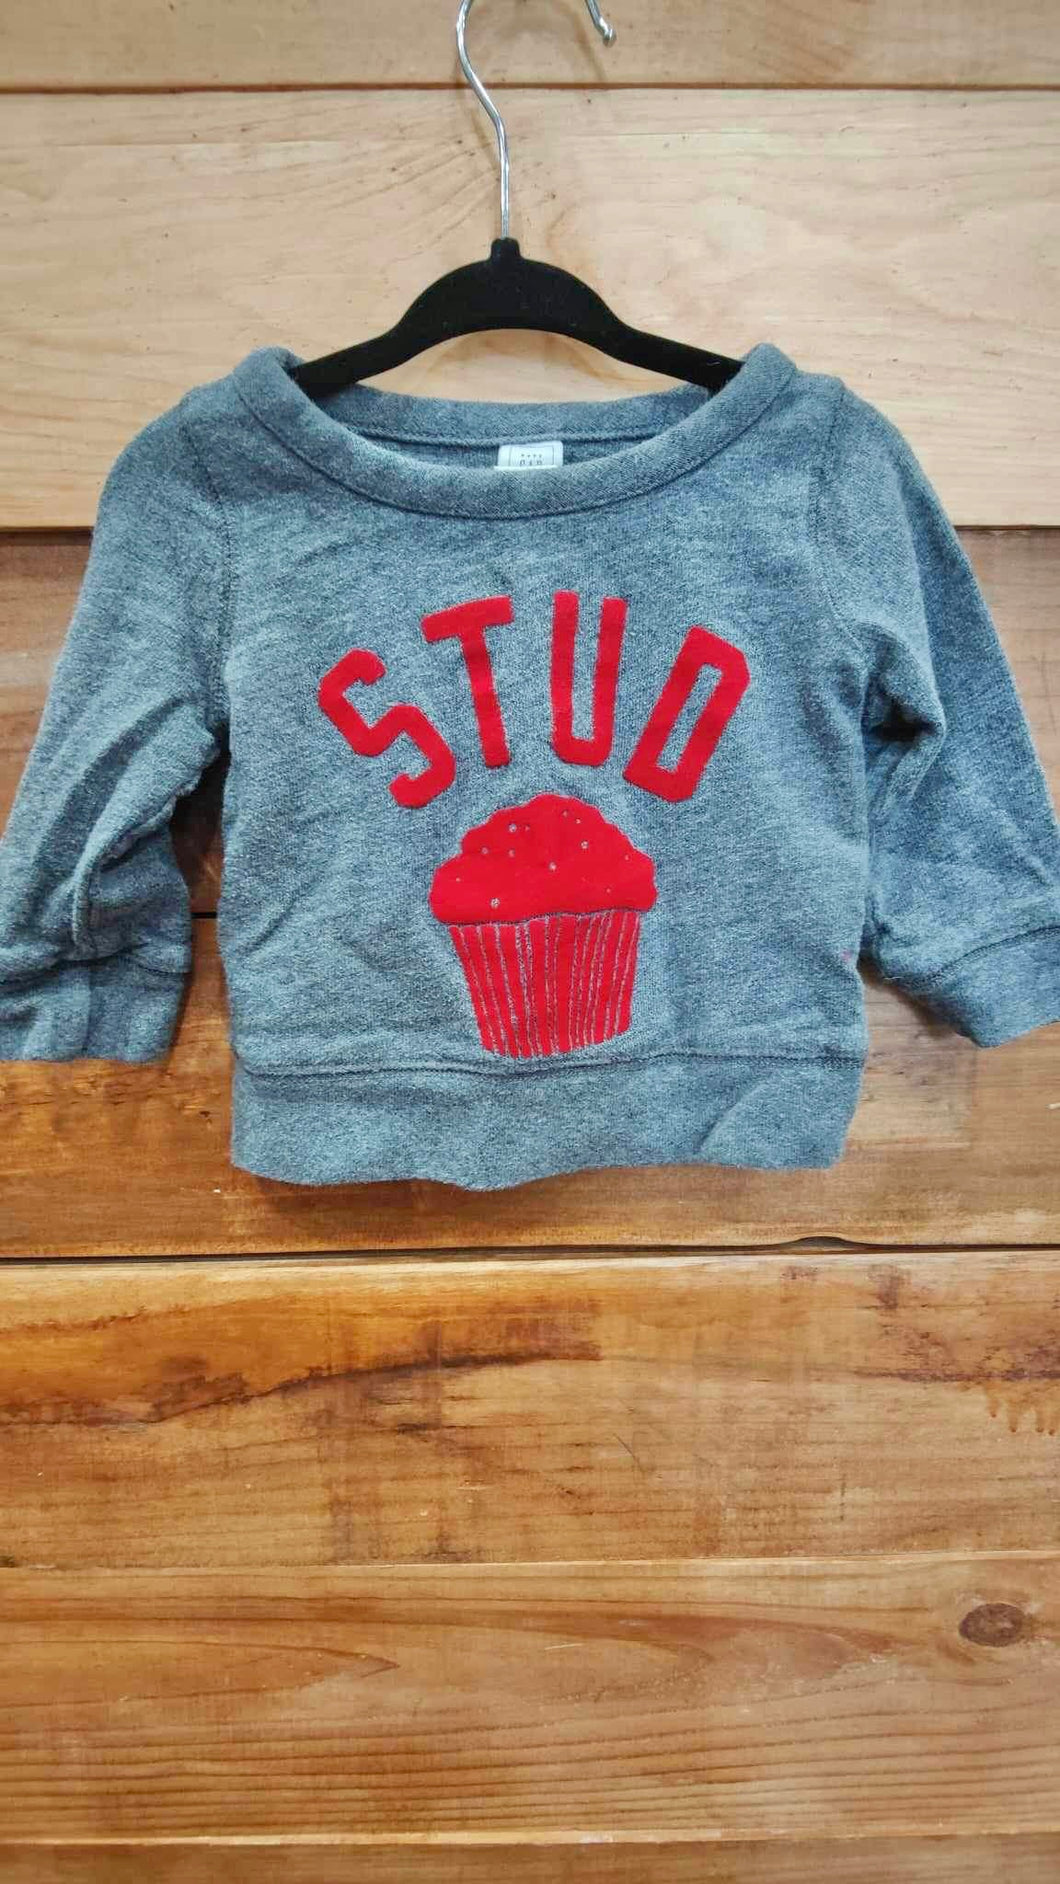 Gap Stud Muffin Sweater Size 6-12m